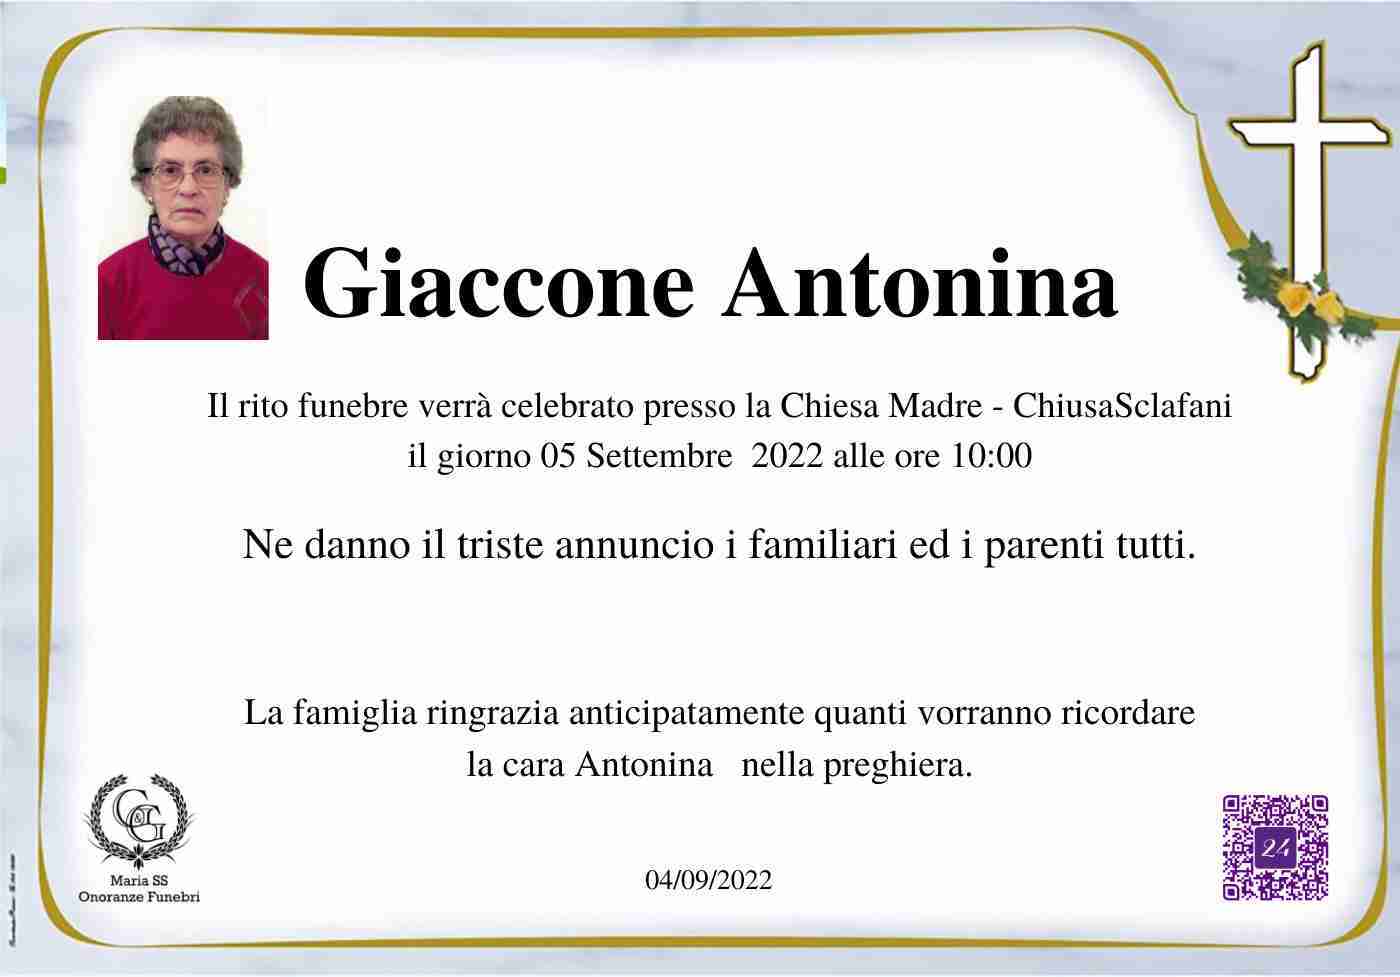 Antonina Giaccone